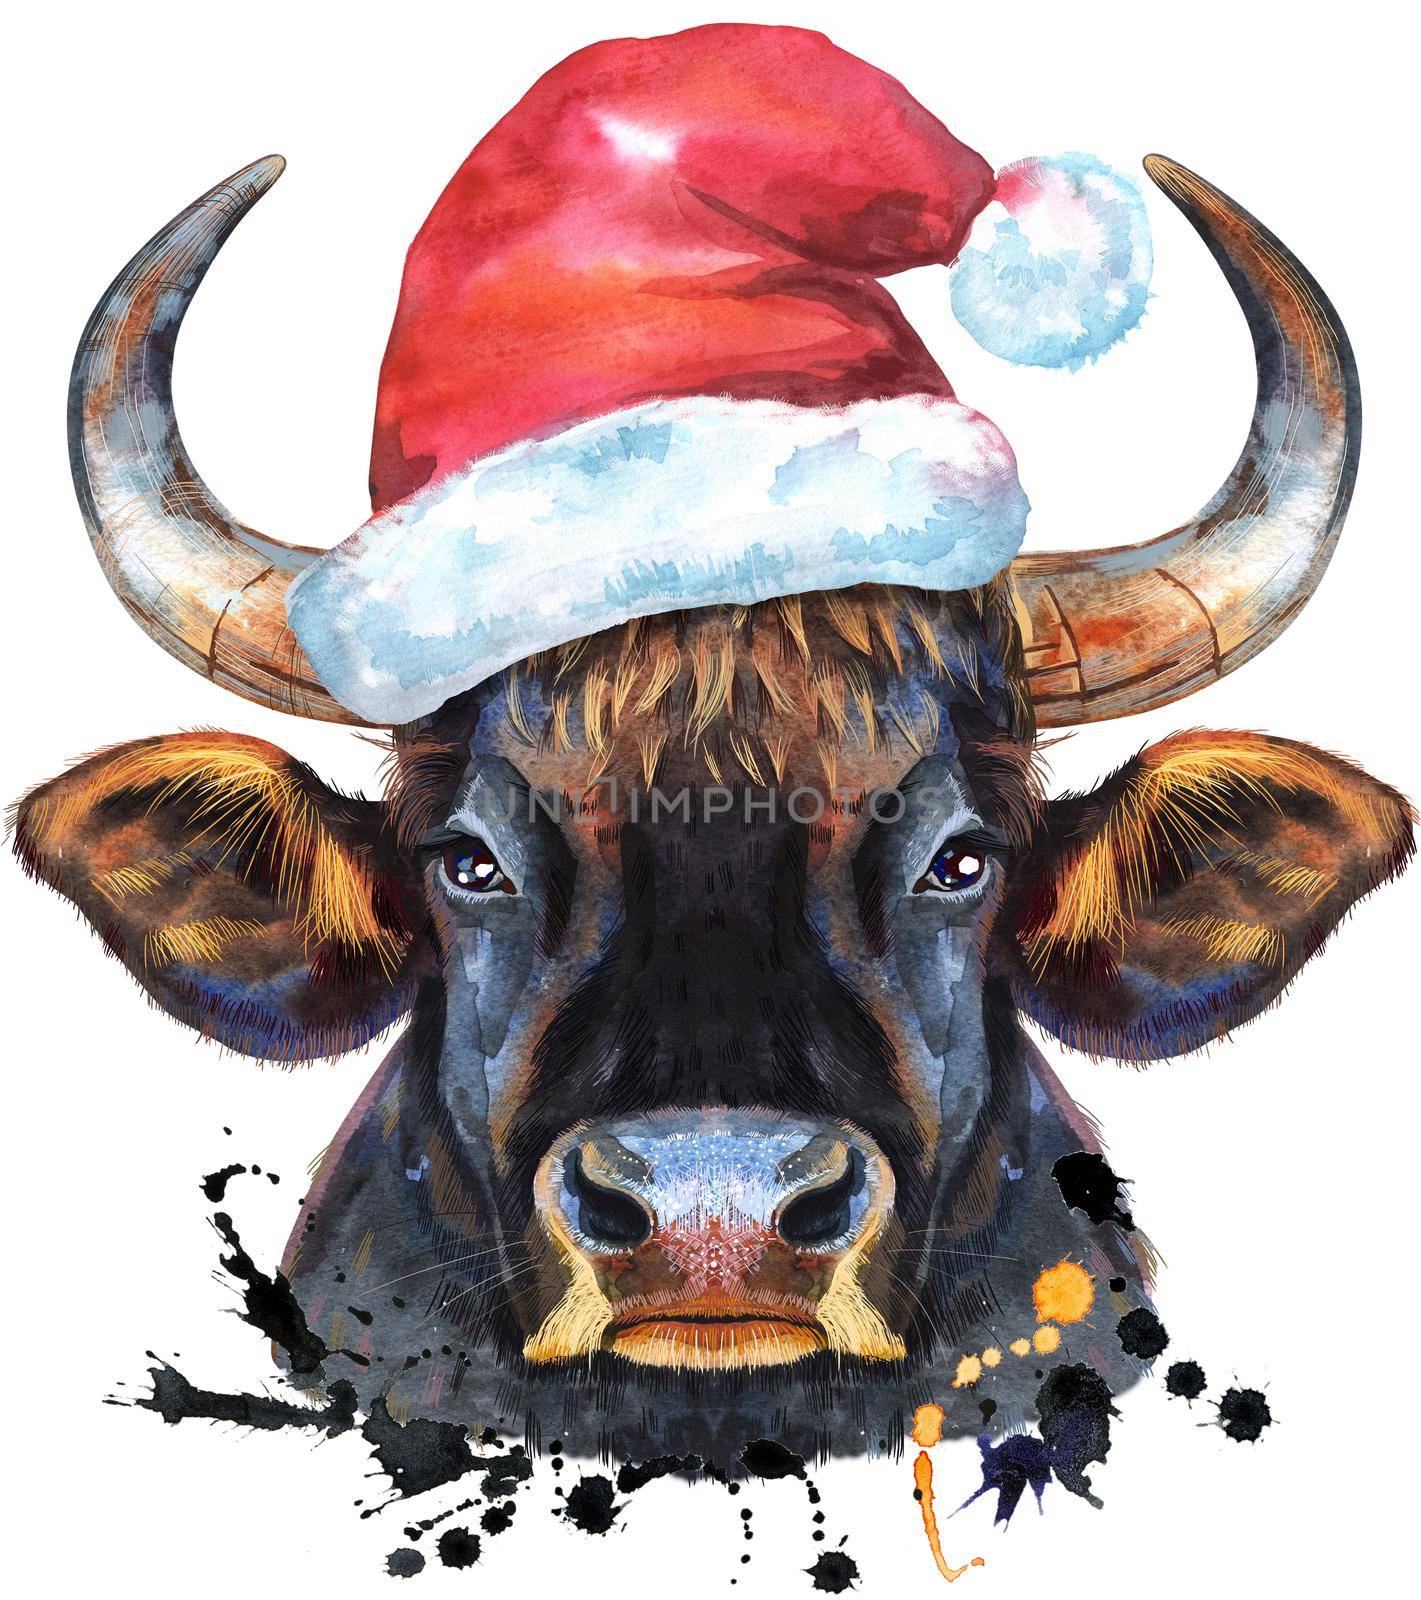 Bull in Santa hat. Watercolor graphics. Bull animal illustration with splashes.